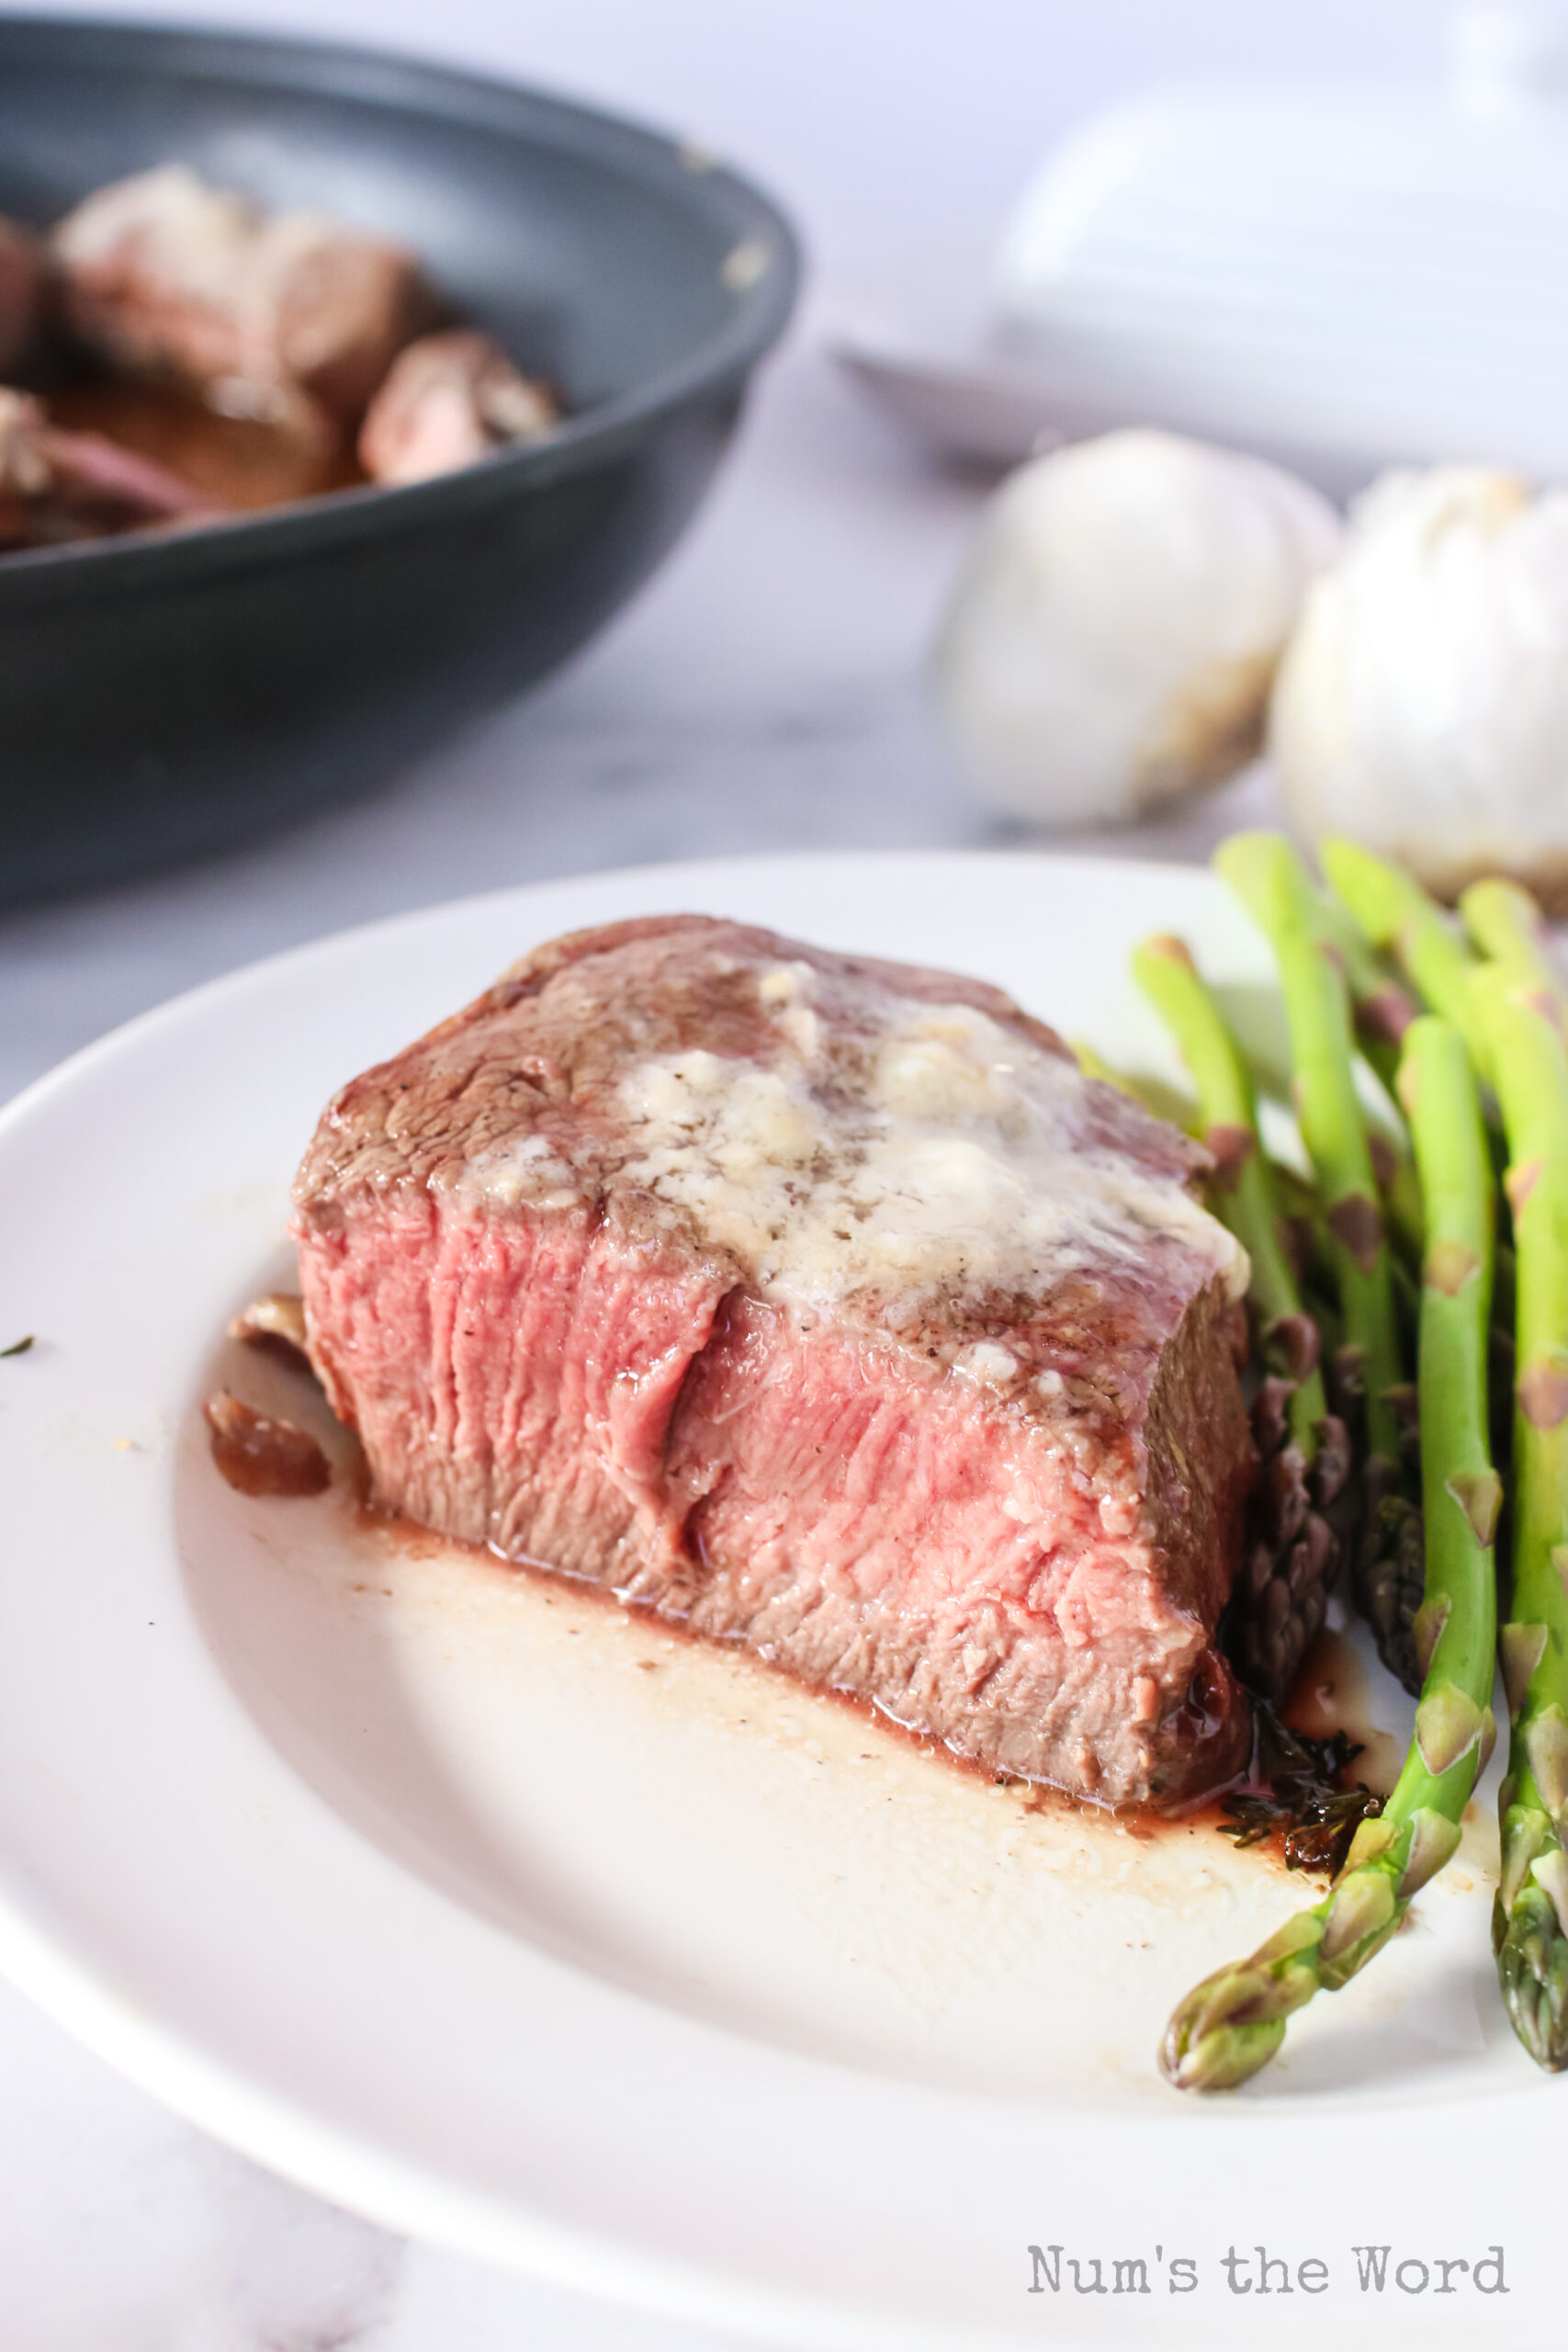 steak cut open to show tender insides